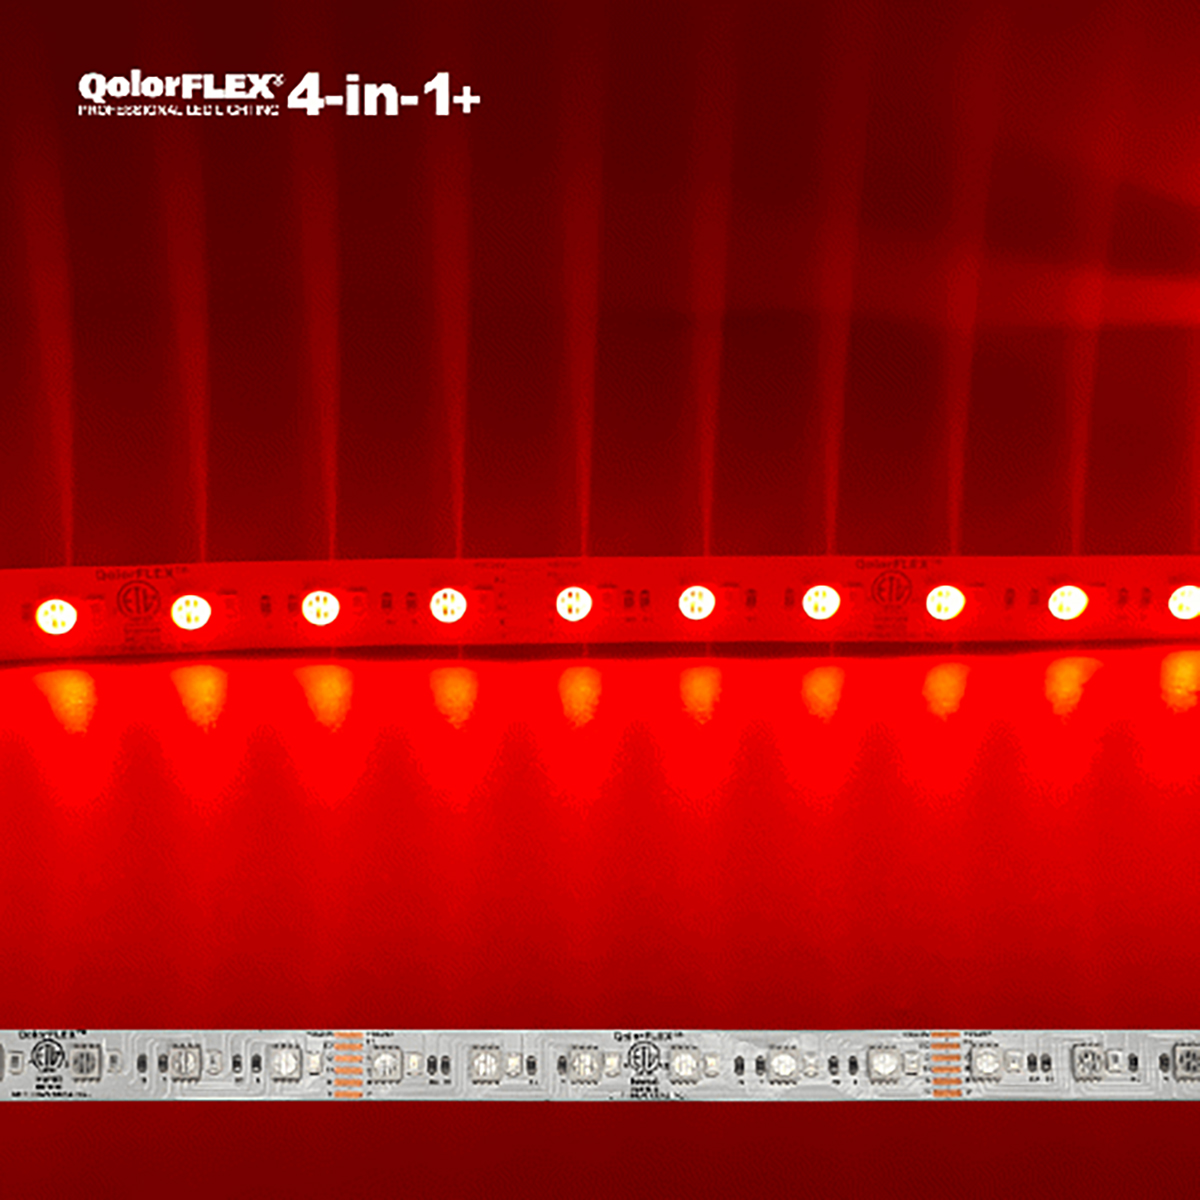 QolorFLEX Quad Chip RGBA Plus Deep Red LED Tape, deep red colorway (still)